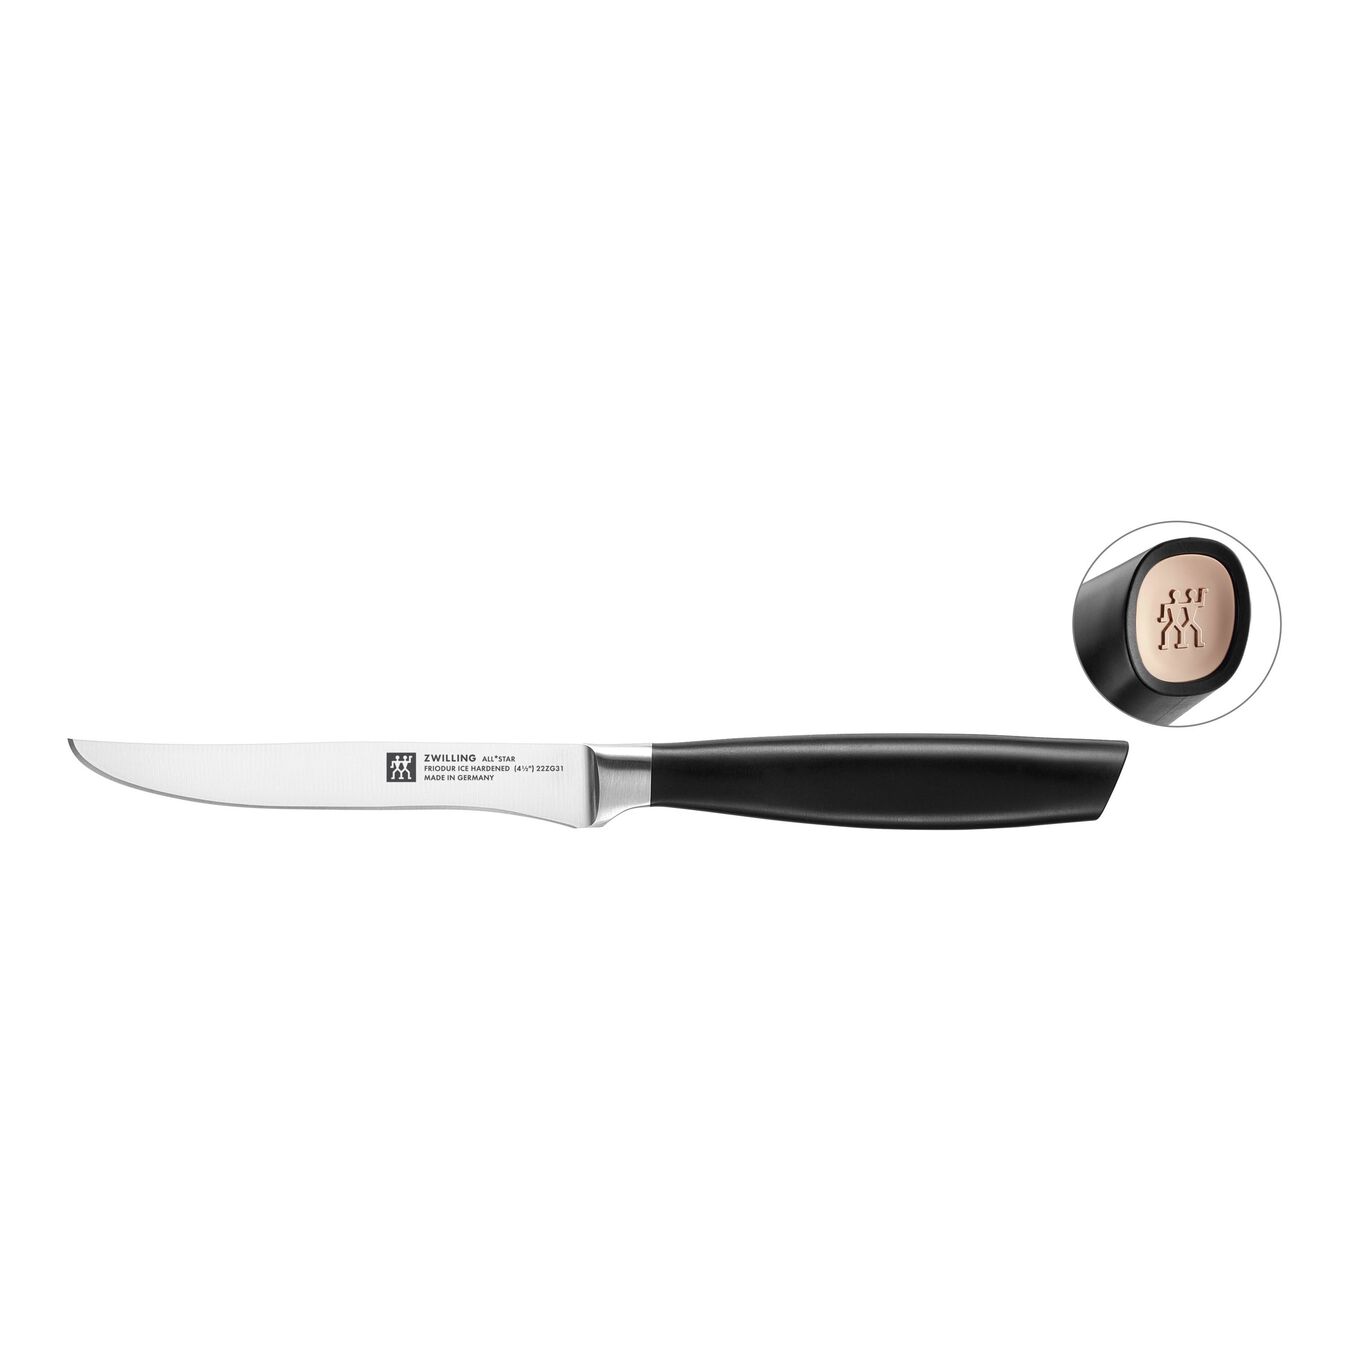 Grill kniv 12 cm, roséguld,,large 1